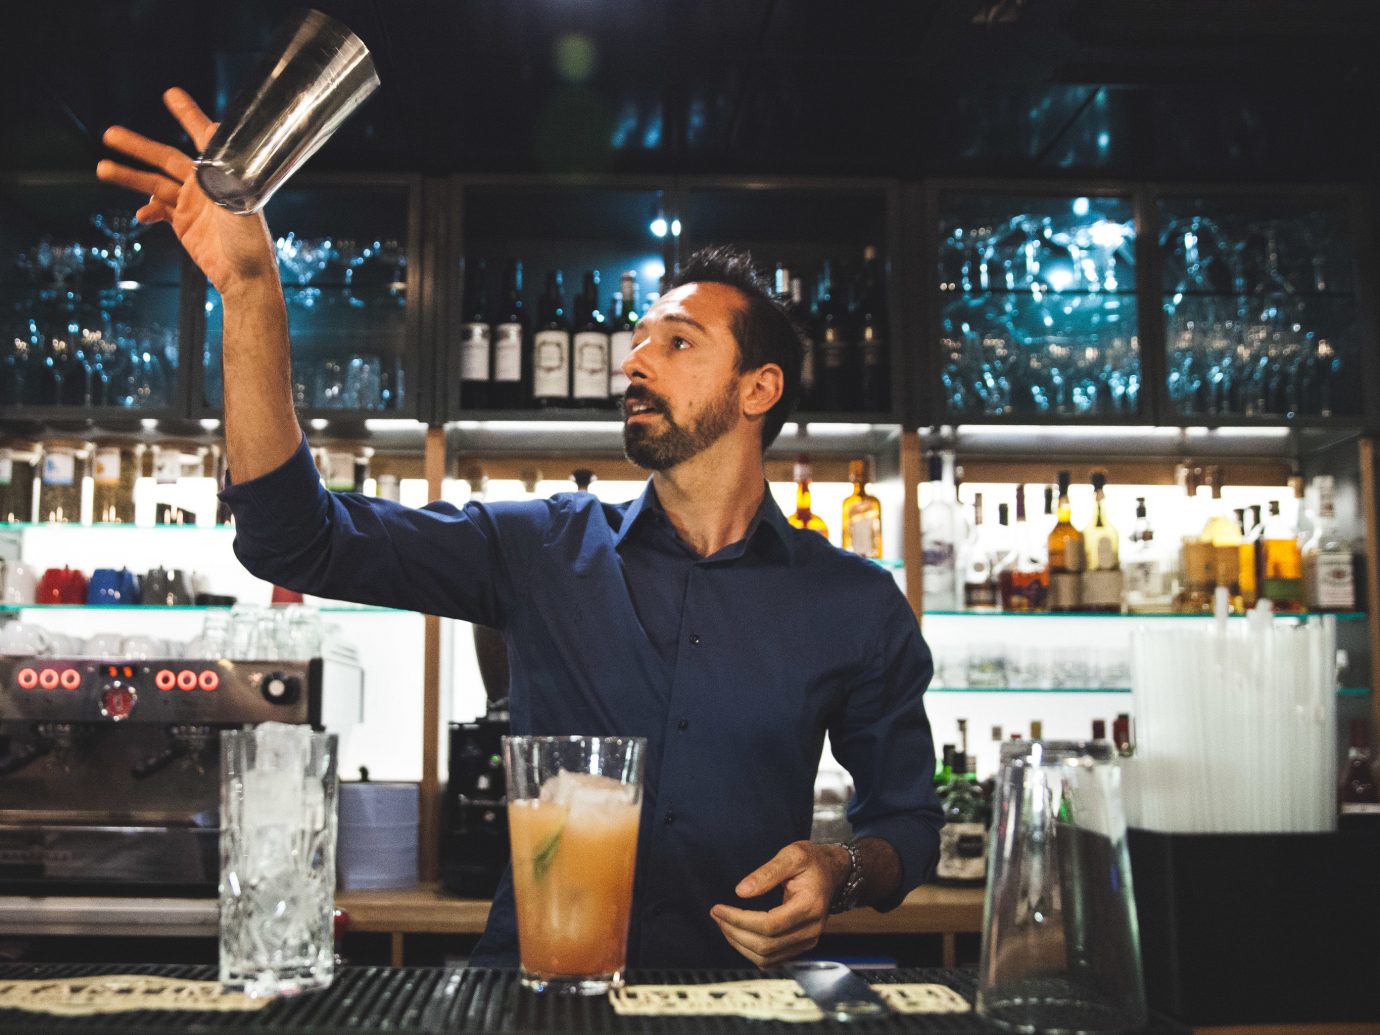 Budget Hotels London person indoor man appliance bartender sense Bar Drink drinking